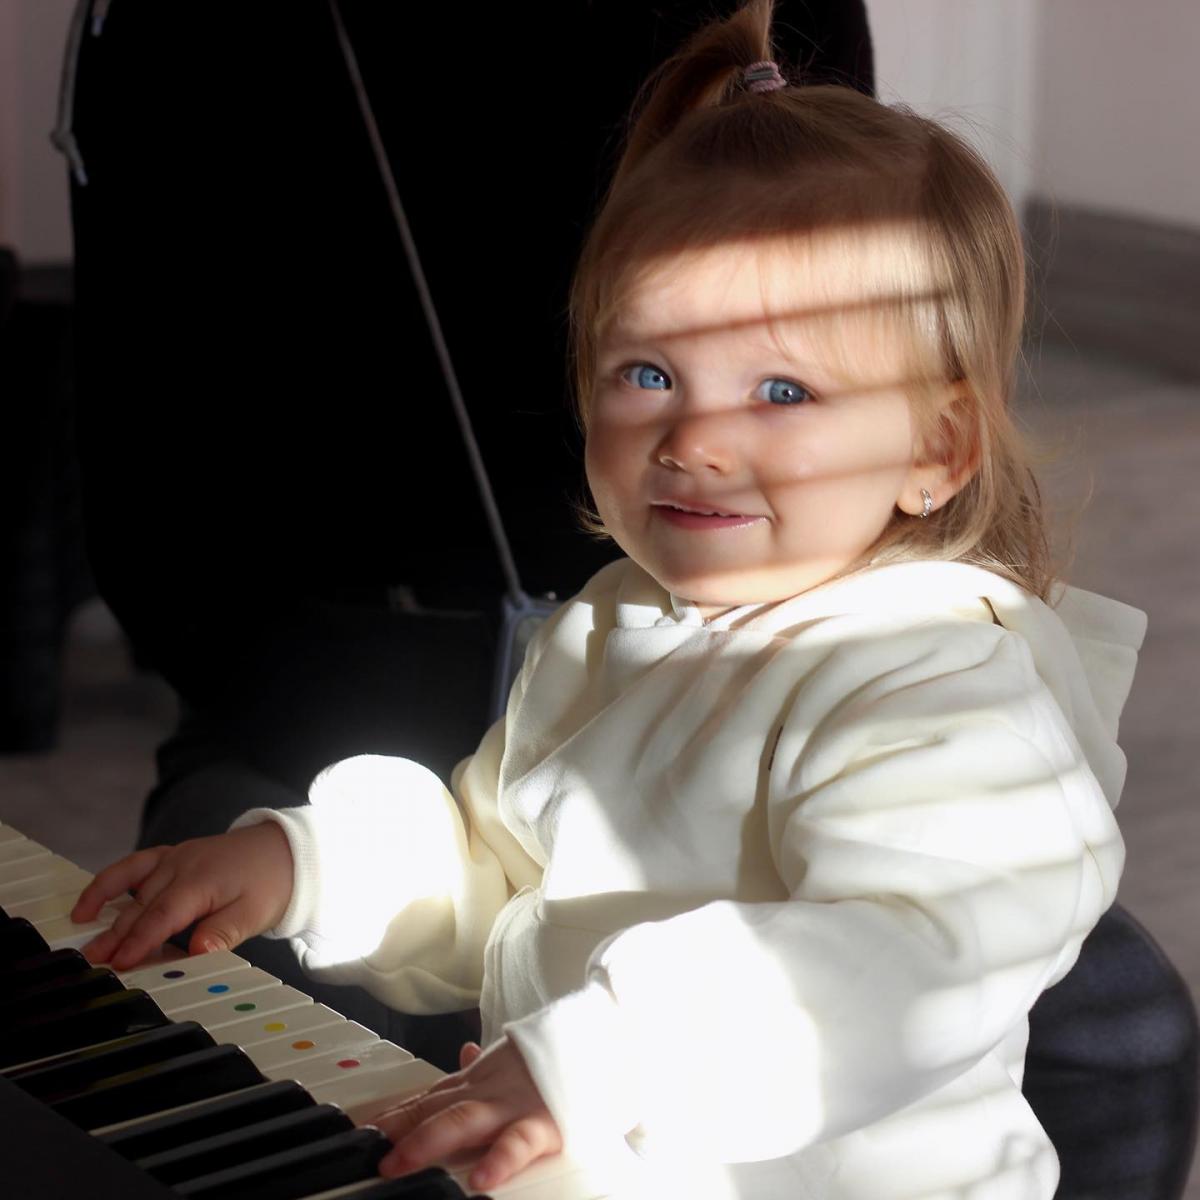 cours-eveil-musique-piano-enfant-bebe-nice-ecole-bubble-art-gioffredo